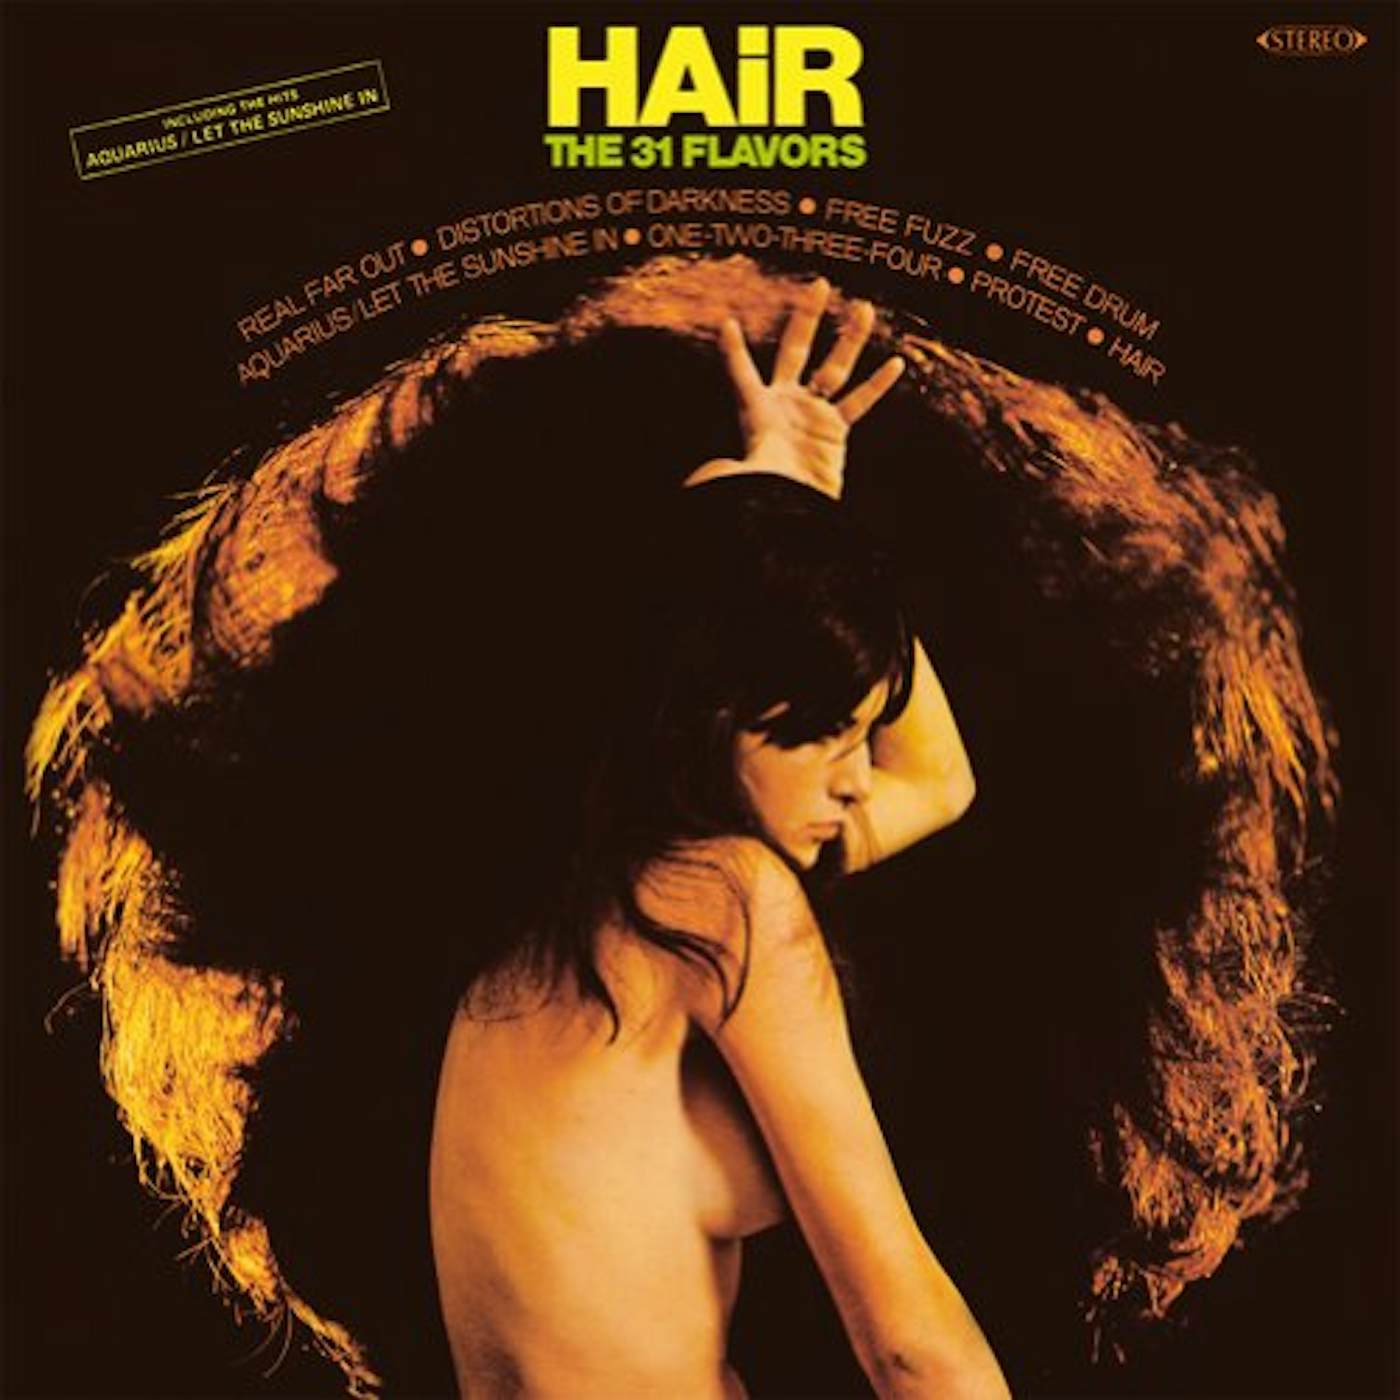 The 31 Flavors Hair Vinyl Record